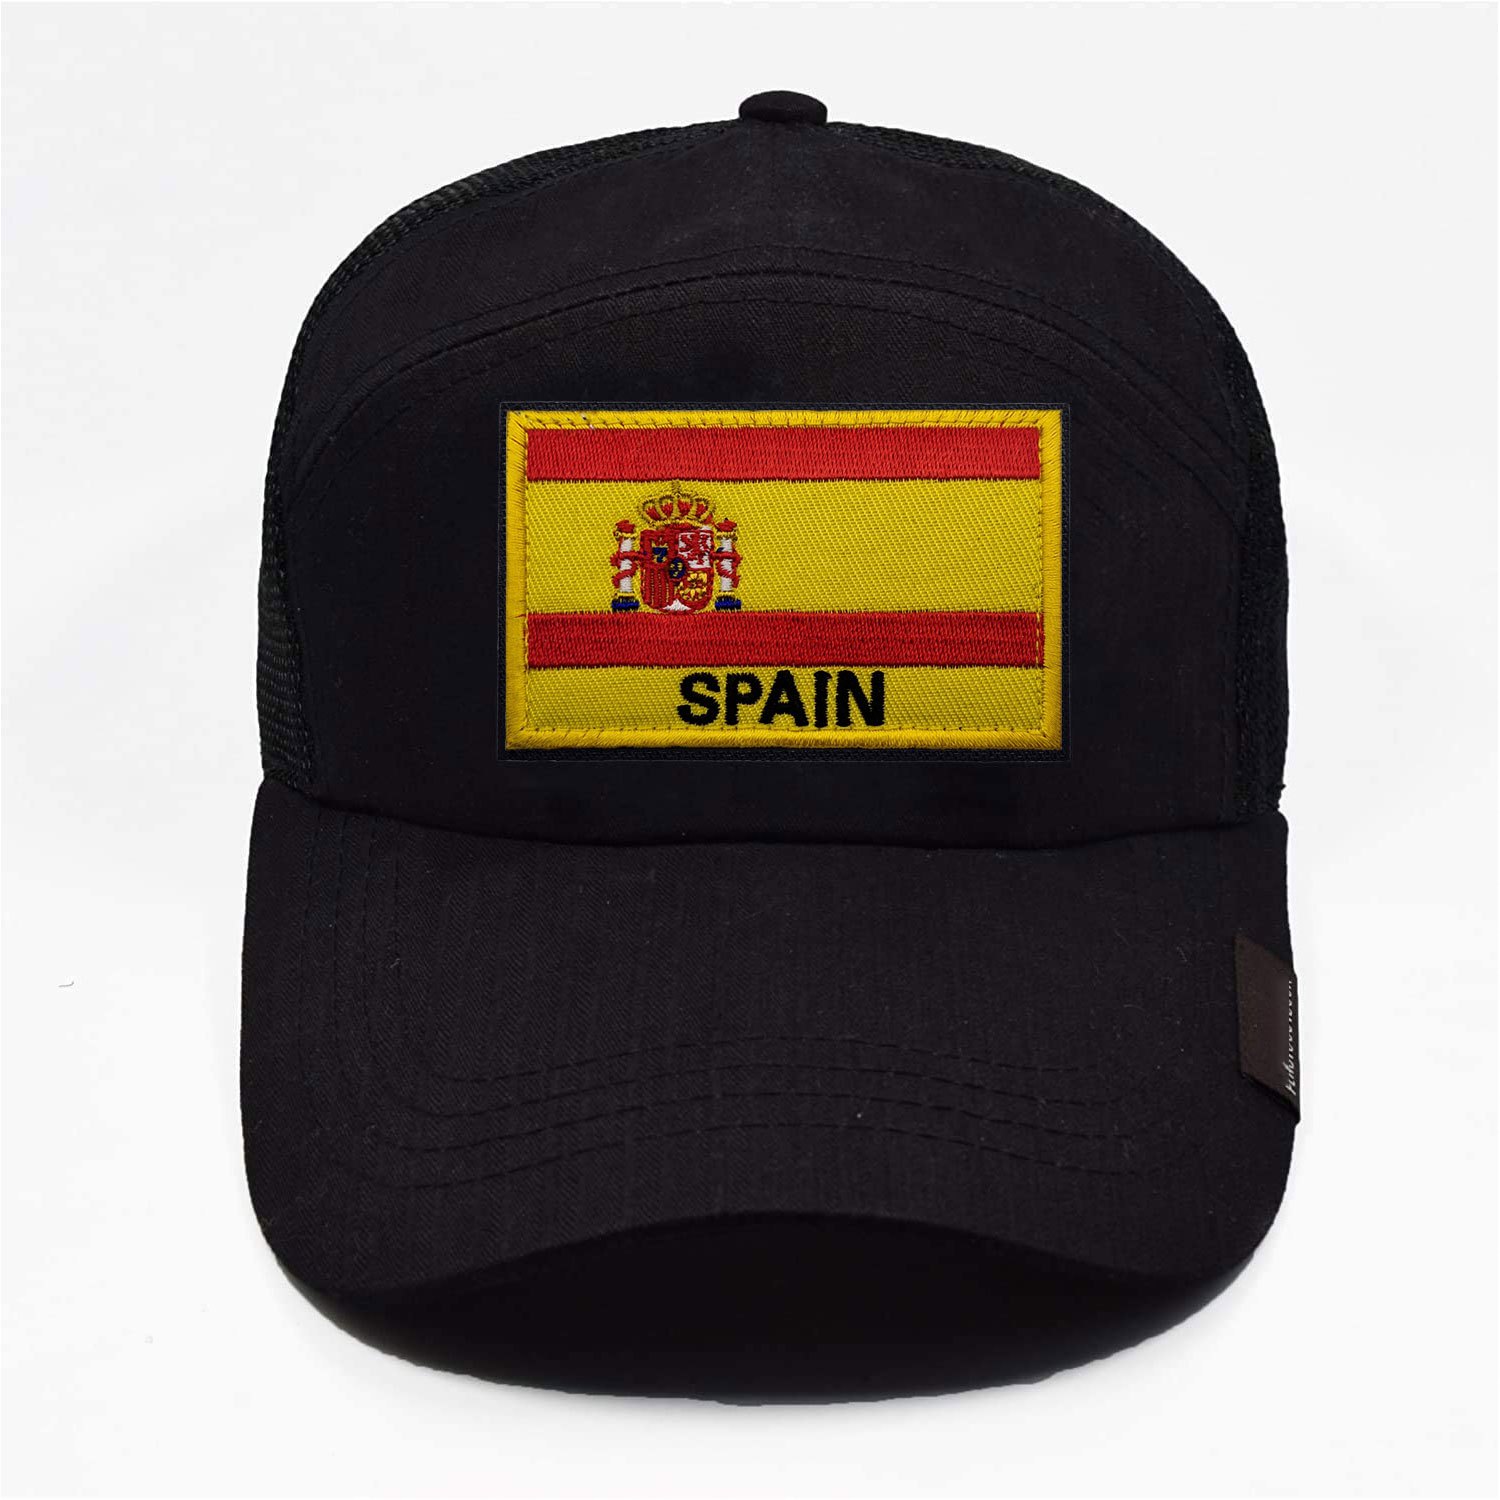 1Pcs Parche de Bandera de España Bordado Militar Táctico Parches de Moral  Aplicación Gancho y Lazo Emblema para Gorra Chaqueta